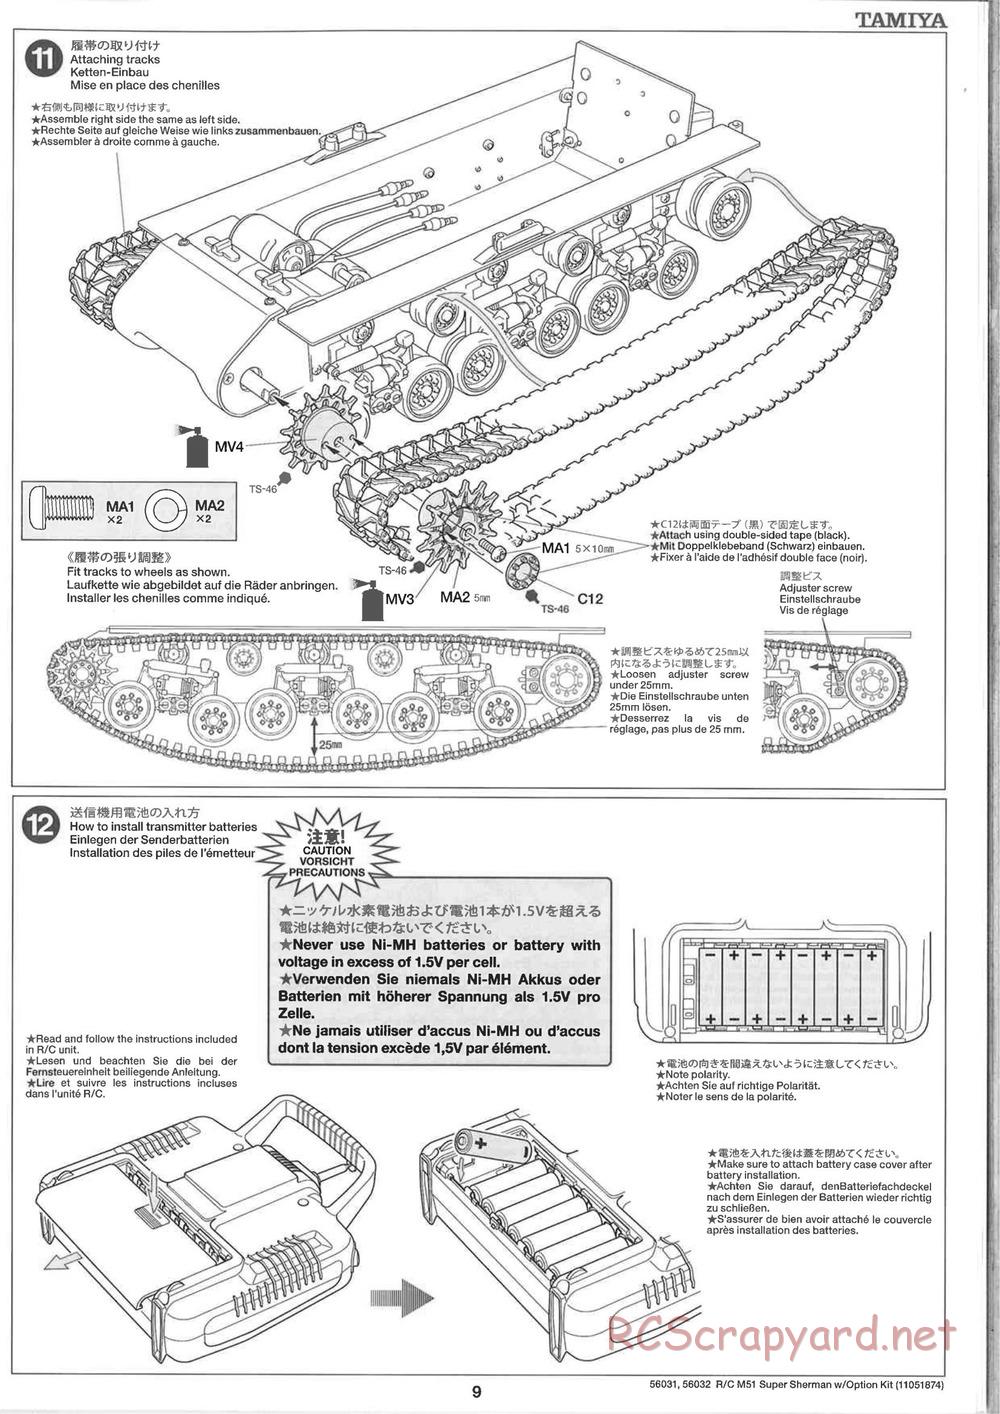 Tamiya - Super Sherman M-51 - 1/16 Scale Chassis - Manual - Page 9